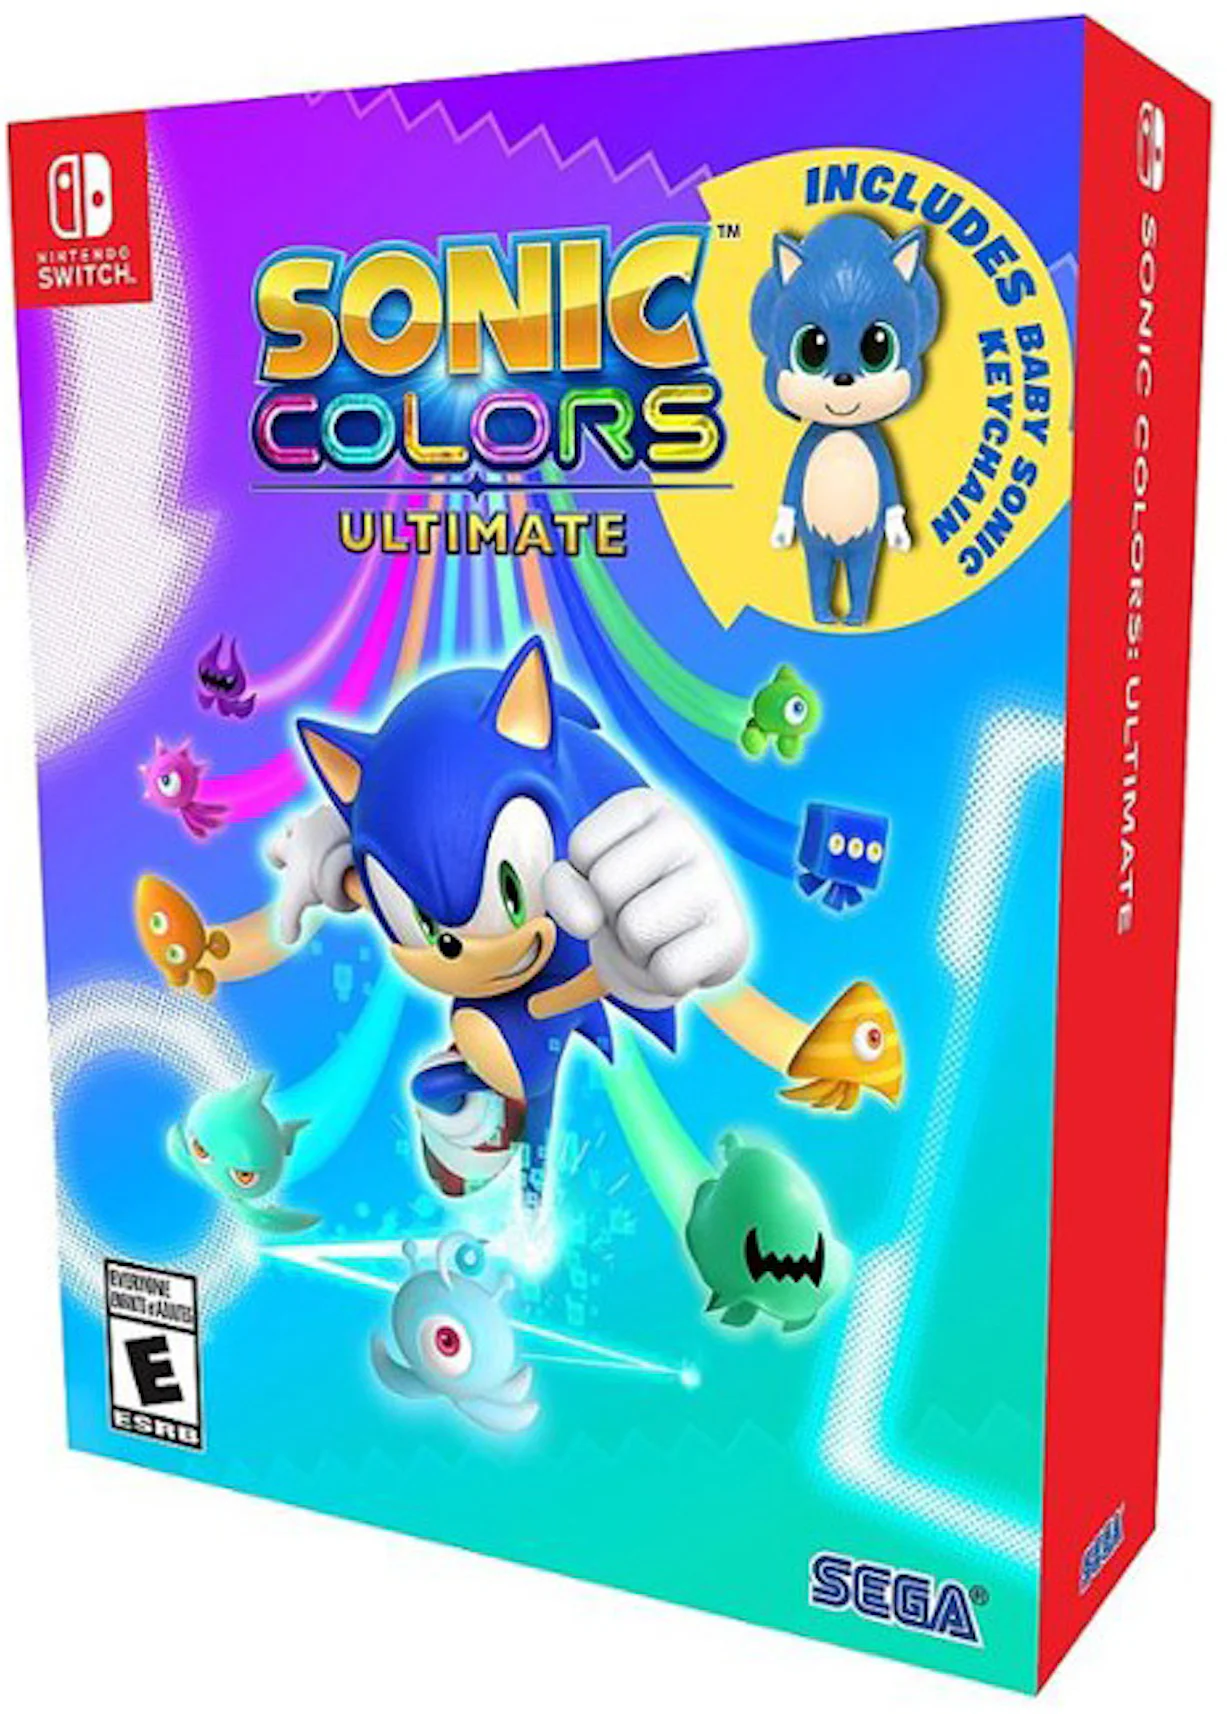 Sega Nintendo Switch Sonic Colors Ultimate Video Game